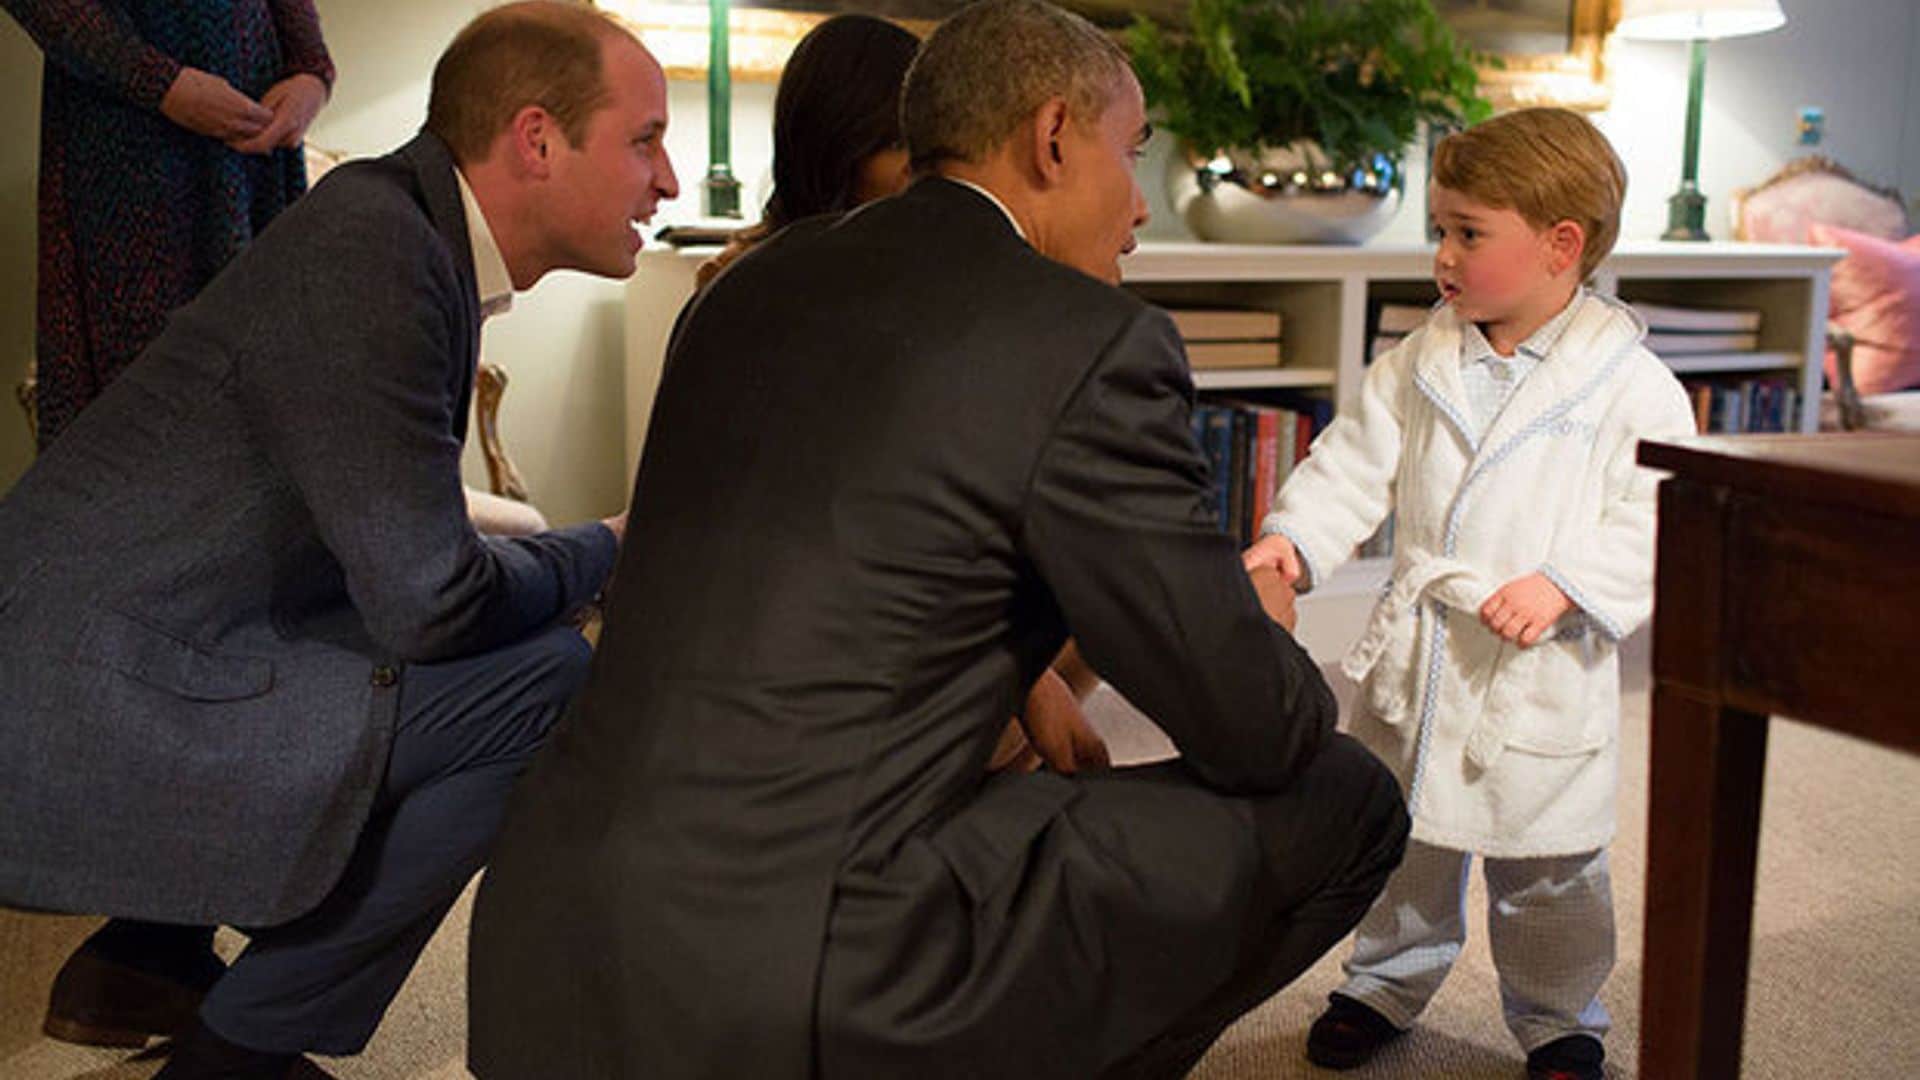 Barack Obama greeted Prince George at his Kensington Palace home.
<br>Photo: Twitter/Kensington Royal